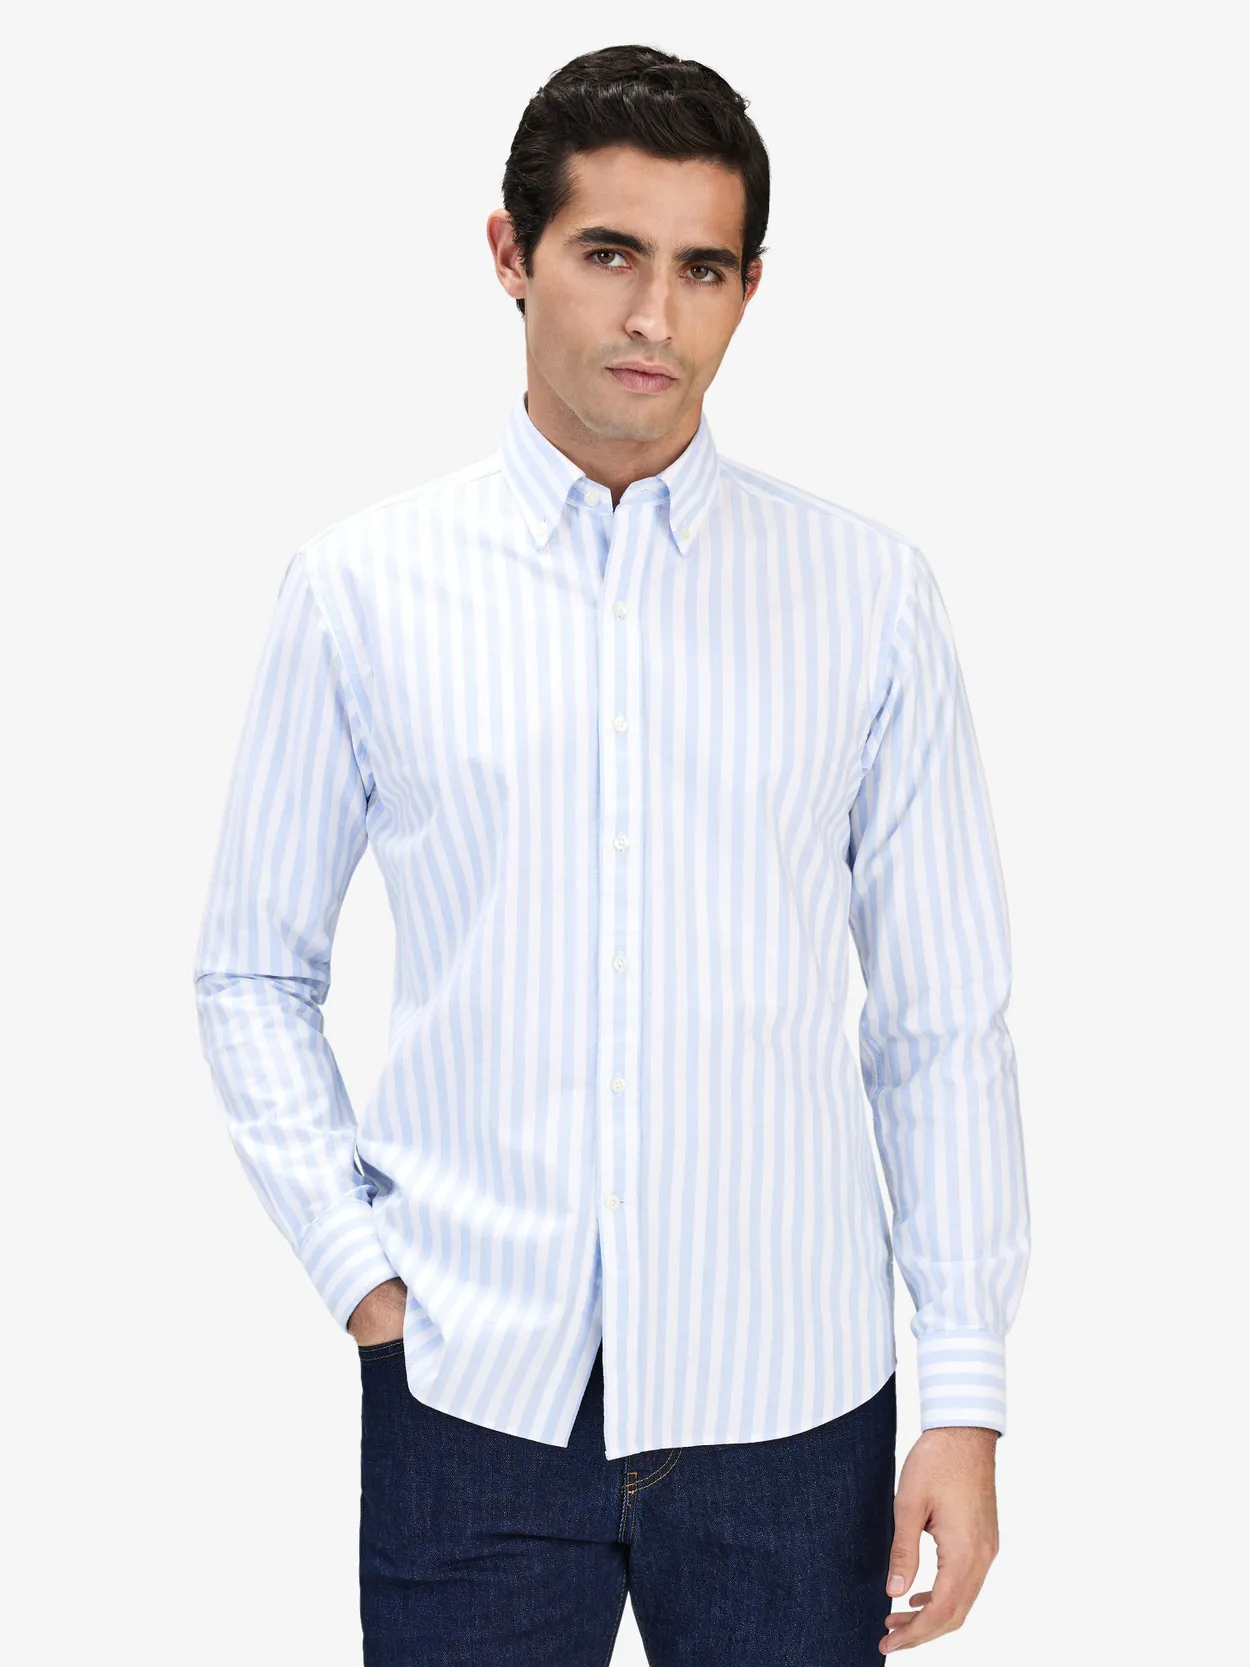 Blue & White Striped Oxford Shirt